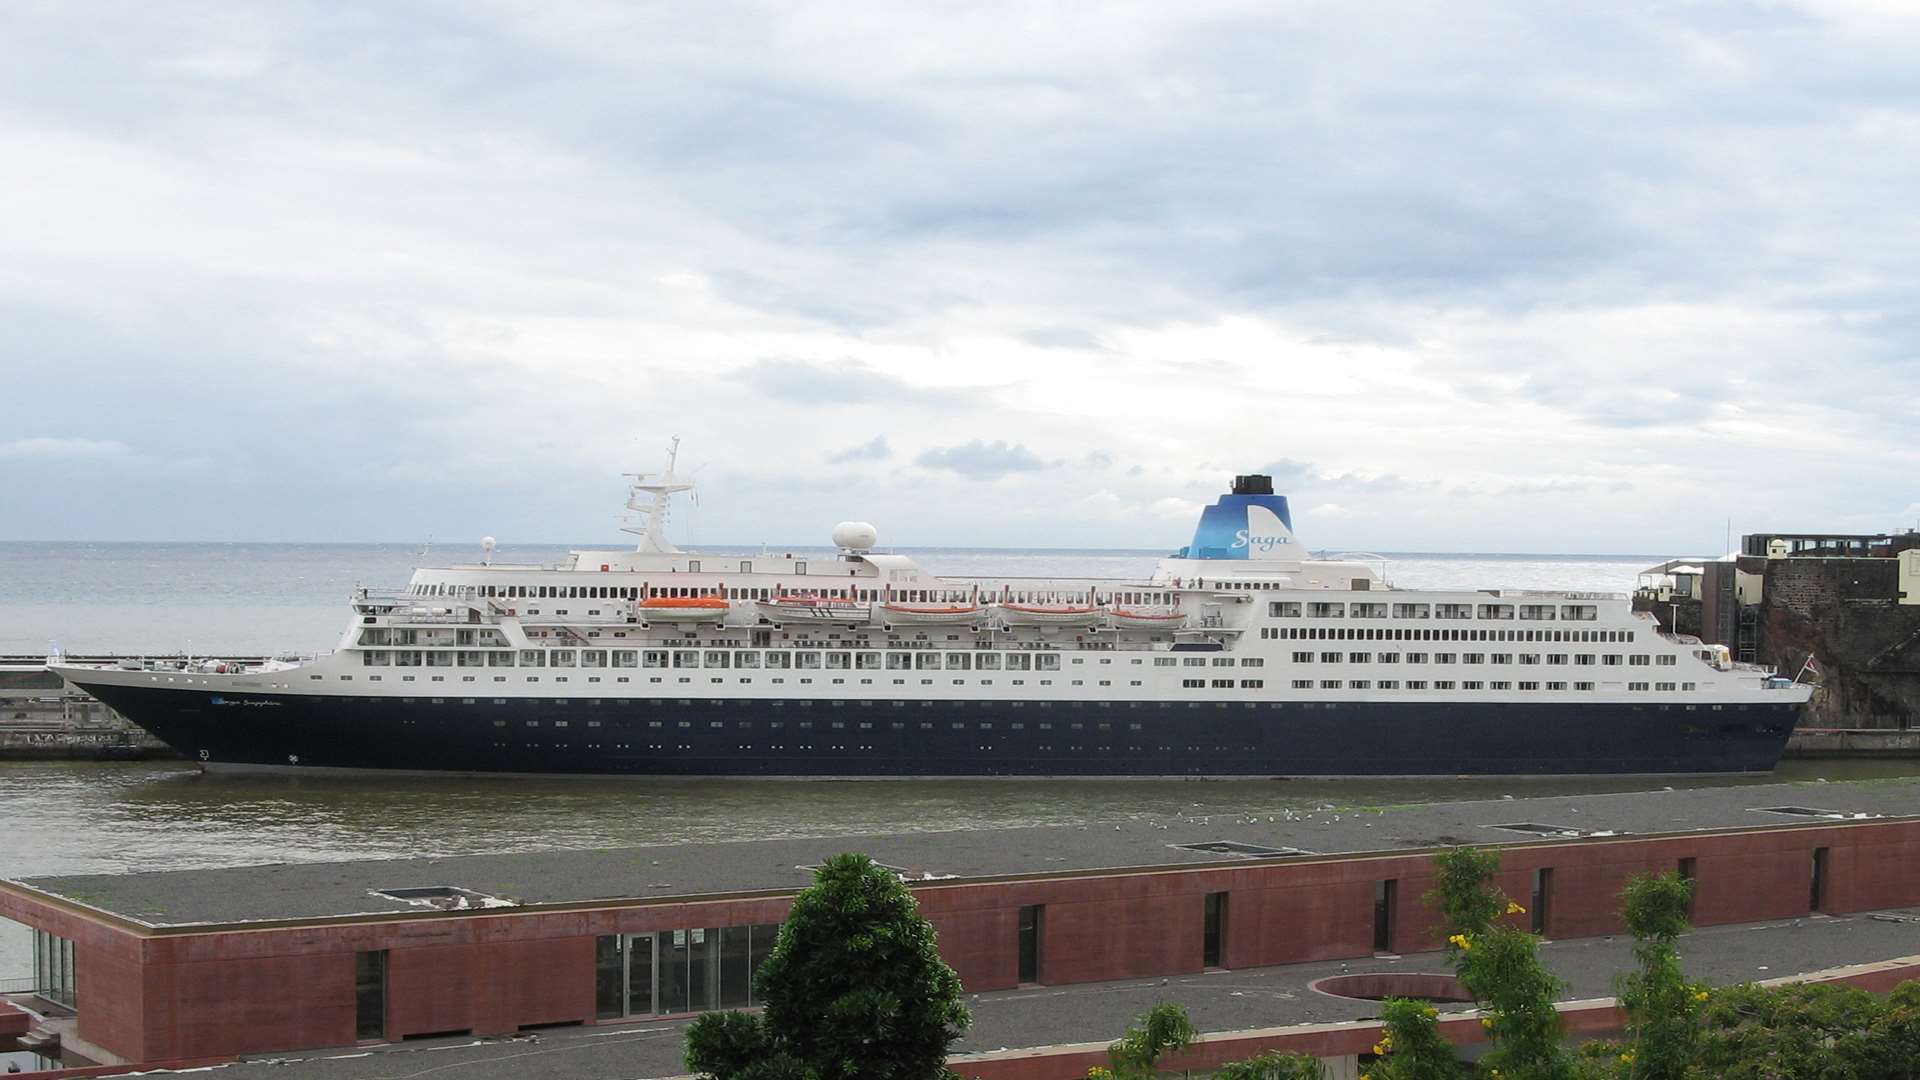 The Saga Sapphire cruise ship.